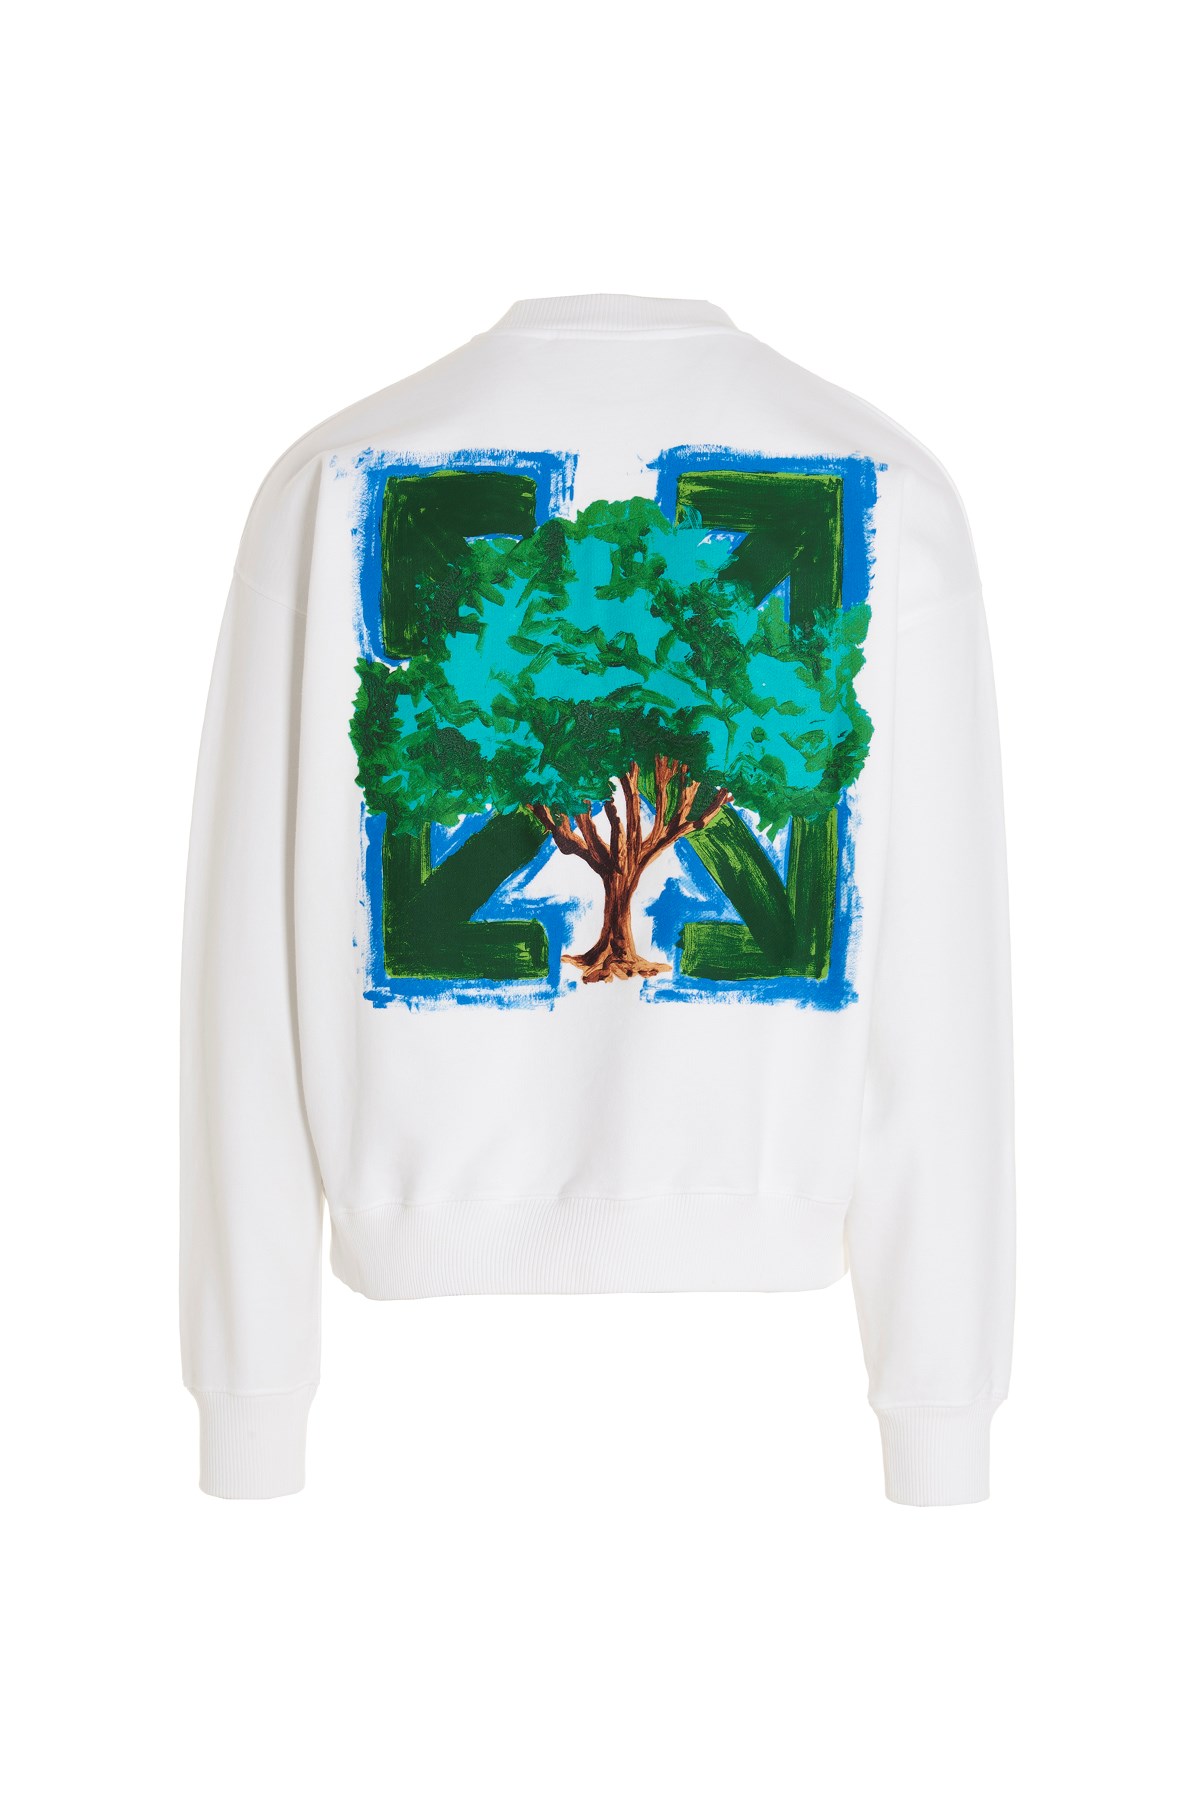 OFF-WHITE 'Arrow Tree' Sweatshirt